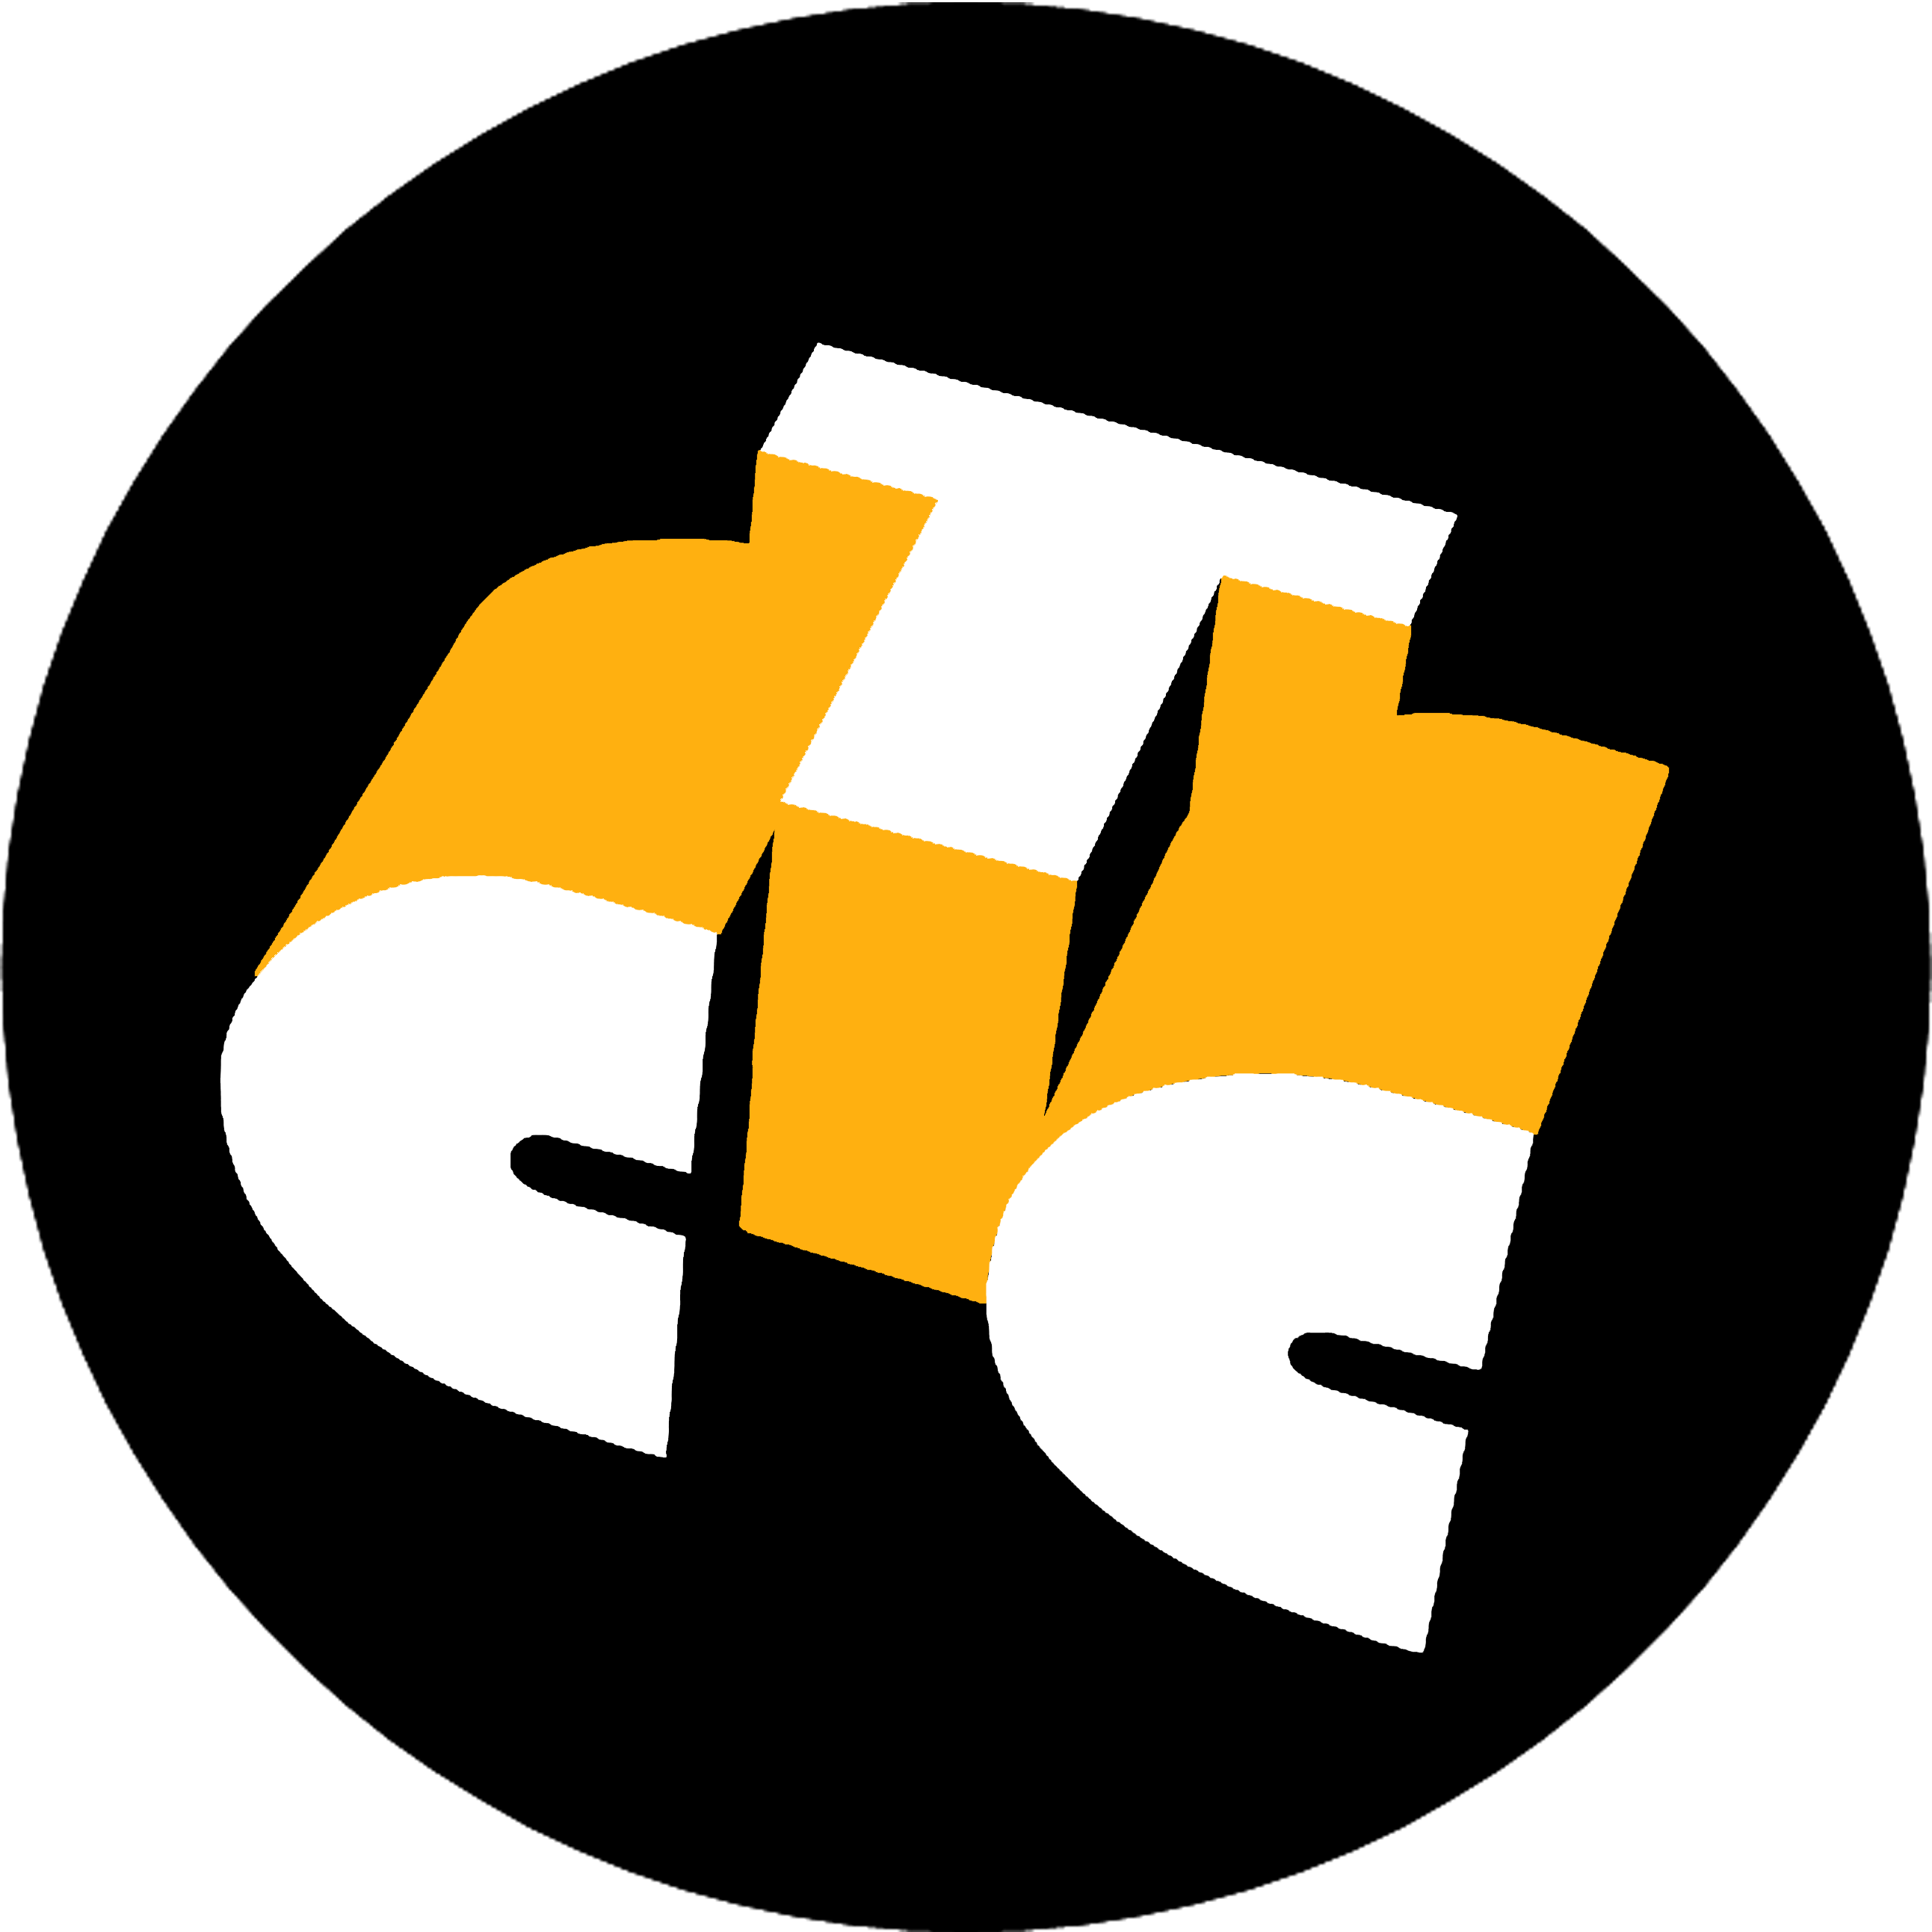 СТС лого 1996. Логотипы каналов СТС 1996. СТС 2001-2005. Логотип канала. 6 канал ru